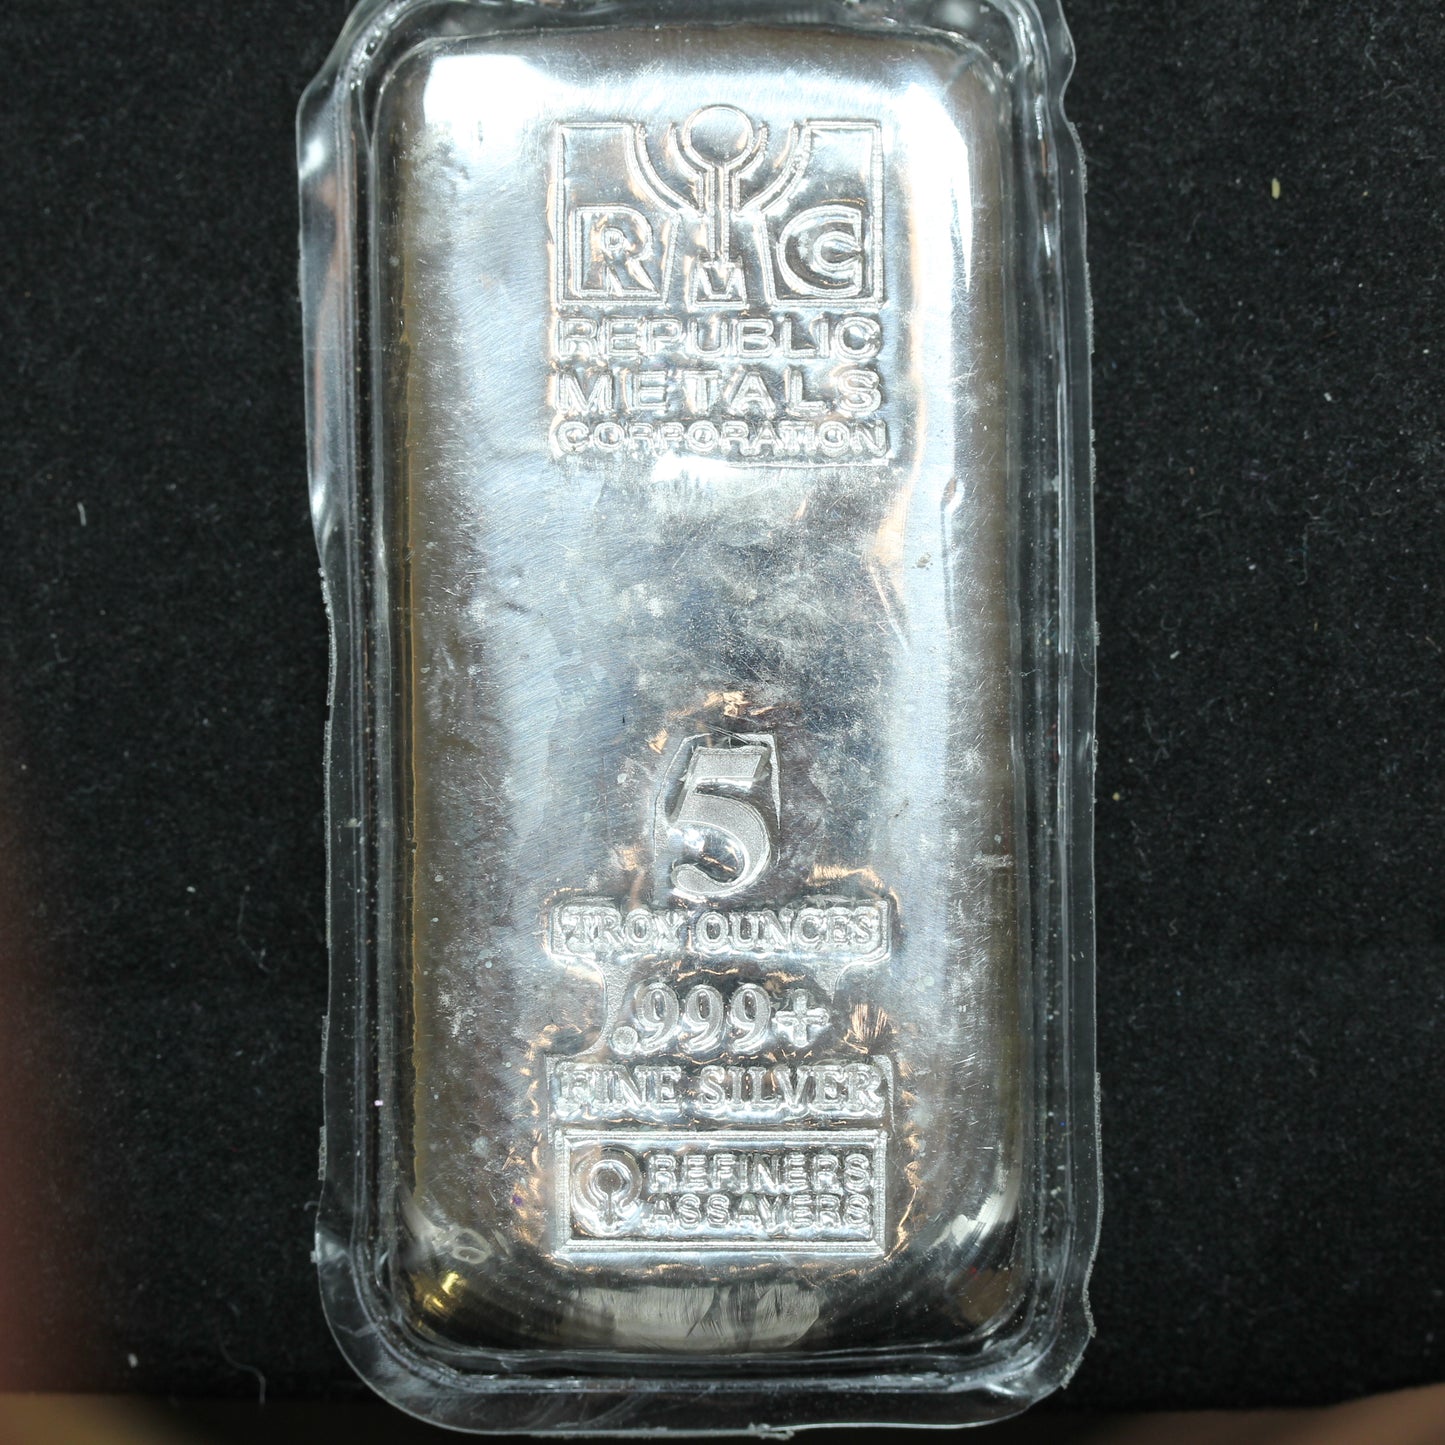 5 oz .999 Fine Silver Republic Metals (RMC) Silver Bar - Sealed